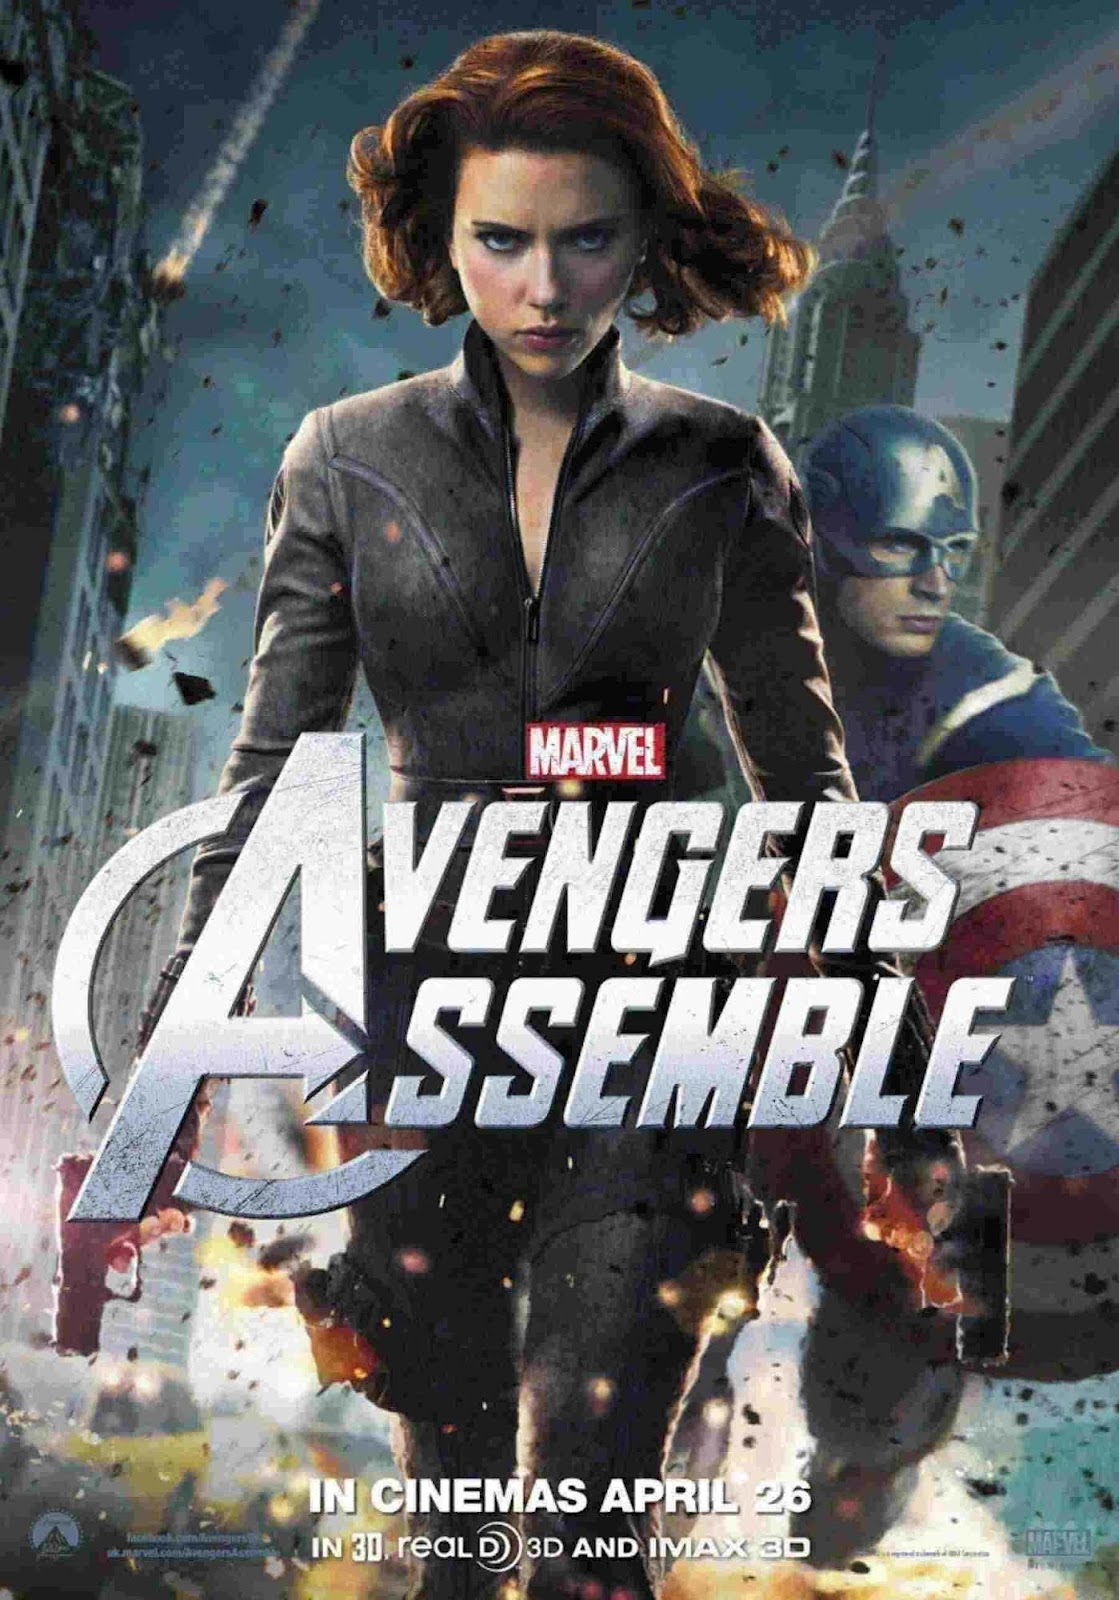 Avengers Assemble. UK Cinemas April 27th 2012. Latest 